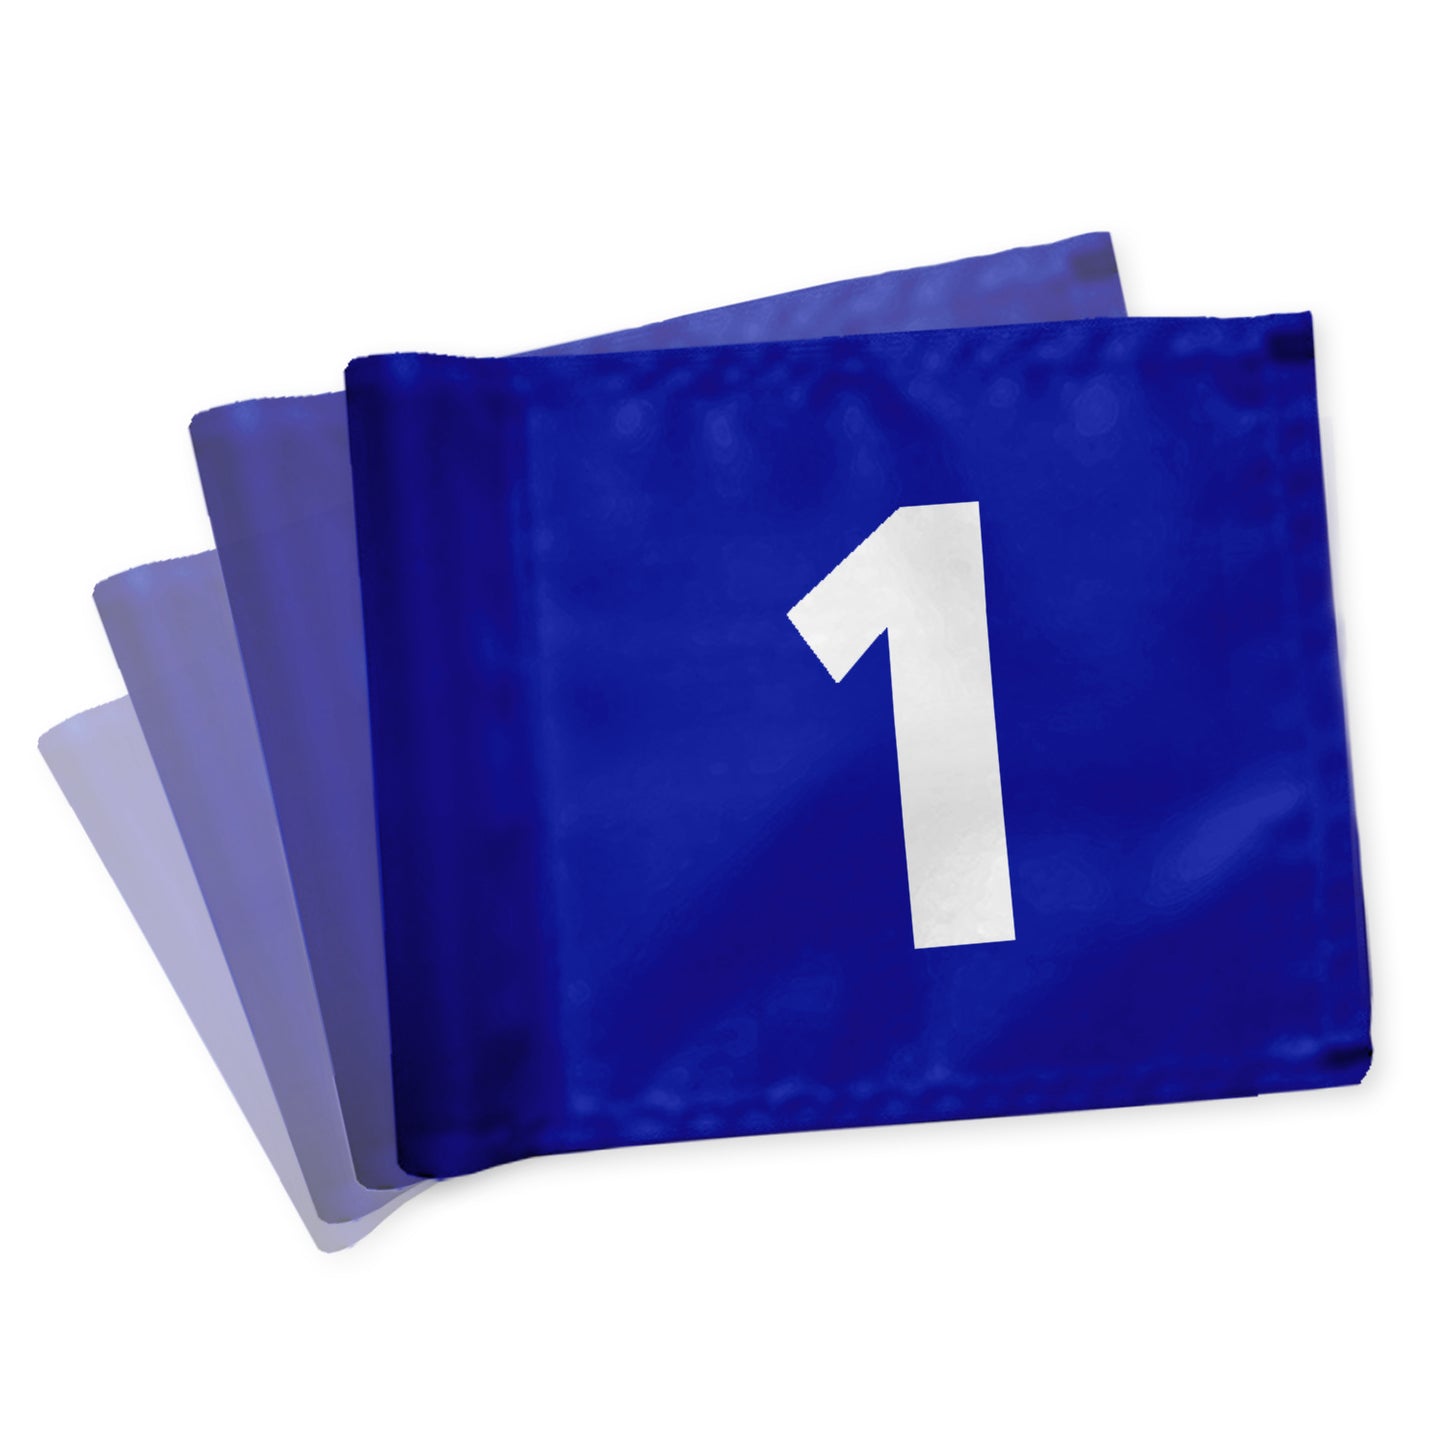 Puttinggreen flagga, enkelsidig, 1-9, blå med vita siffror, 200 gram flaggduk 